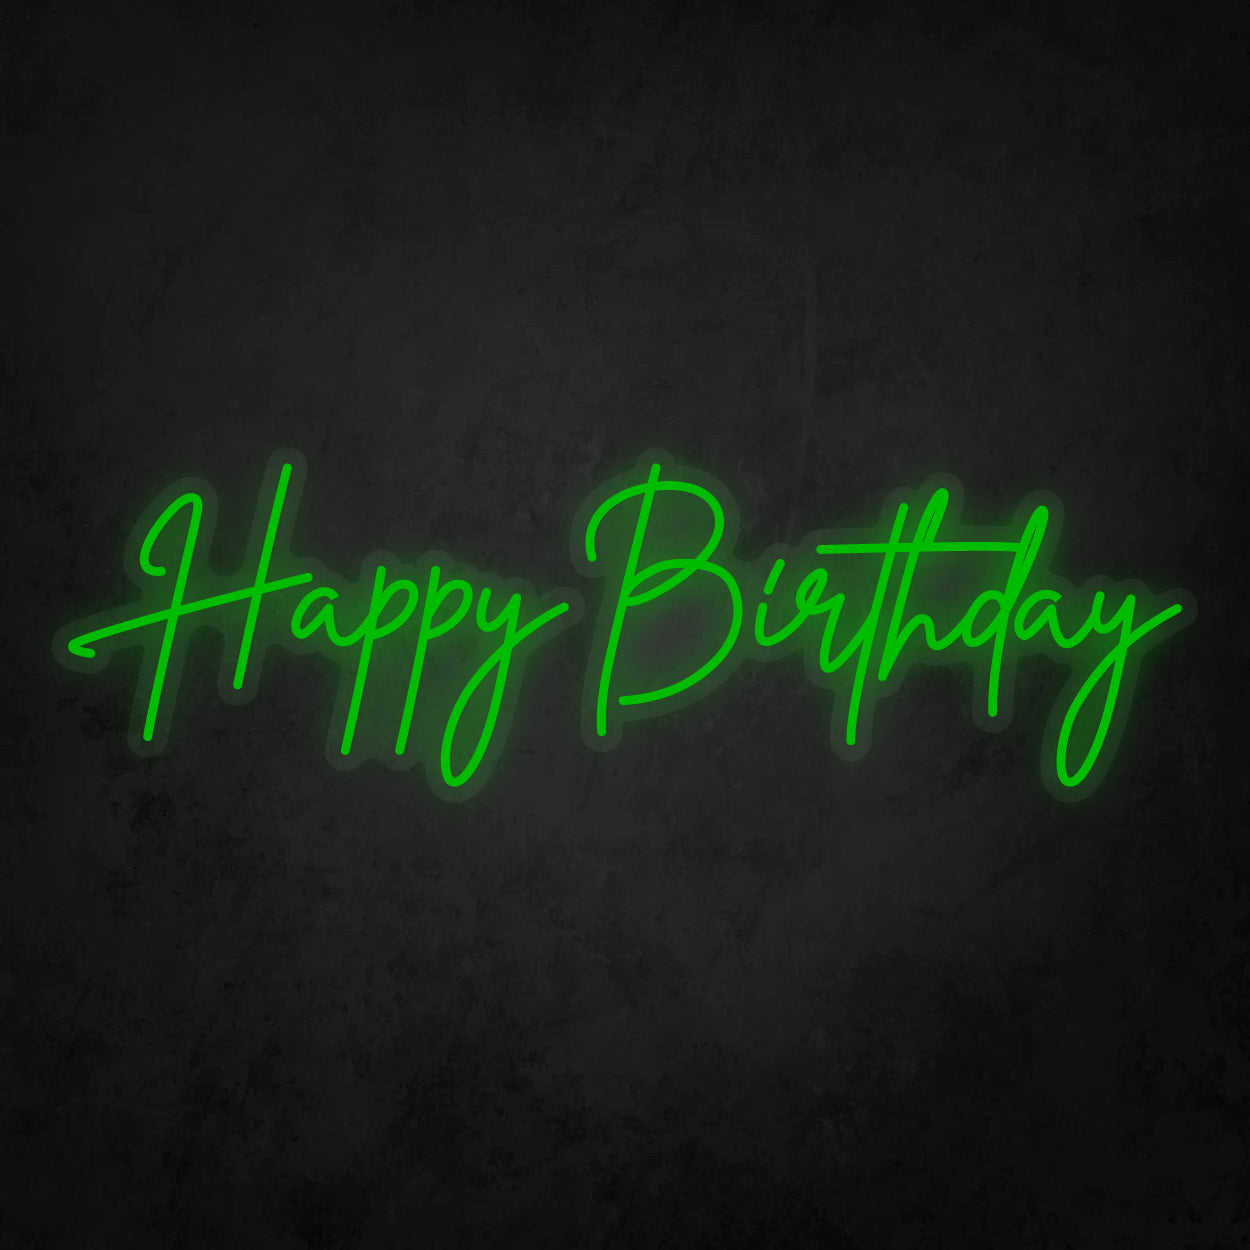 LED Neon Sign - Happy Birthday - Calligraphy